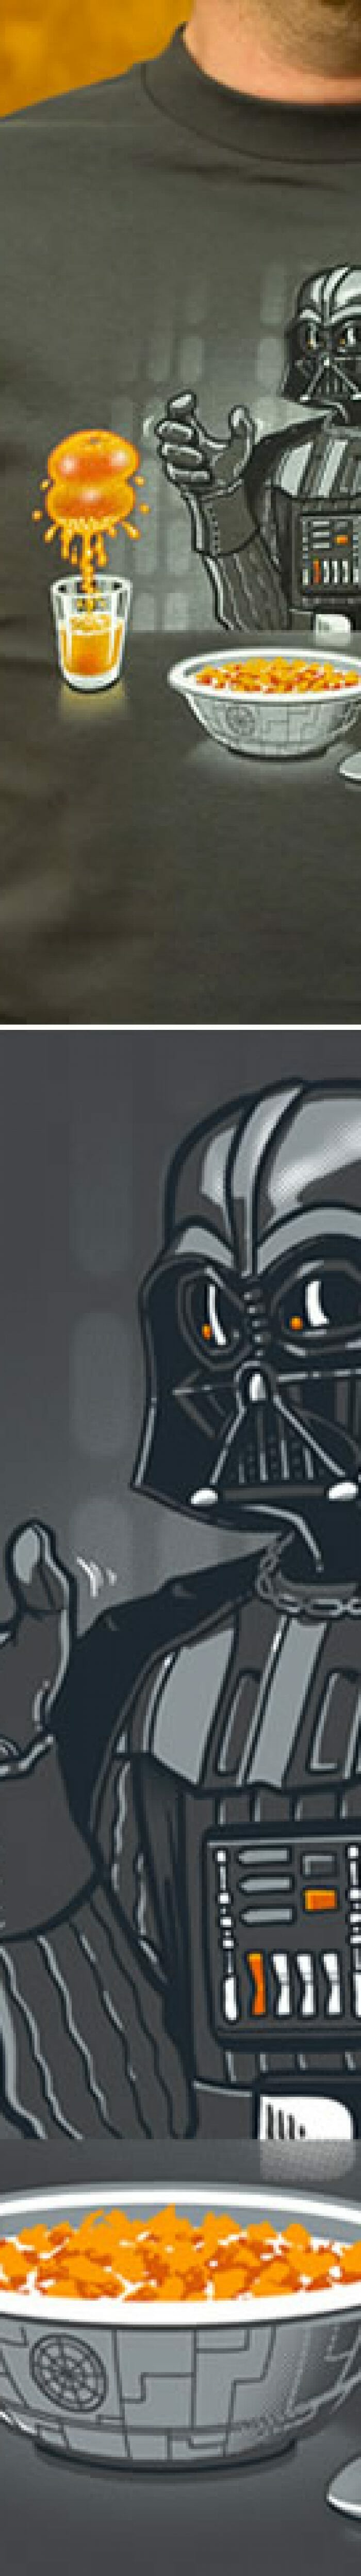 Camiseta geek AWESOME do dia: Imperial Breakfast com Darth Vader